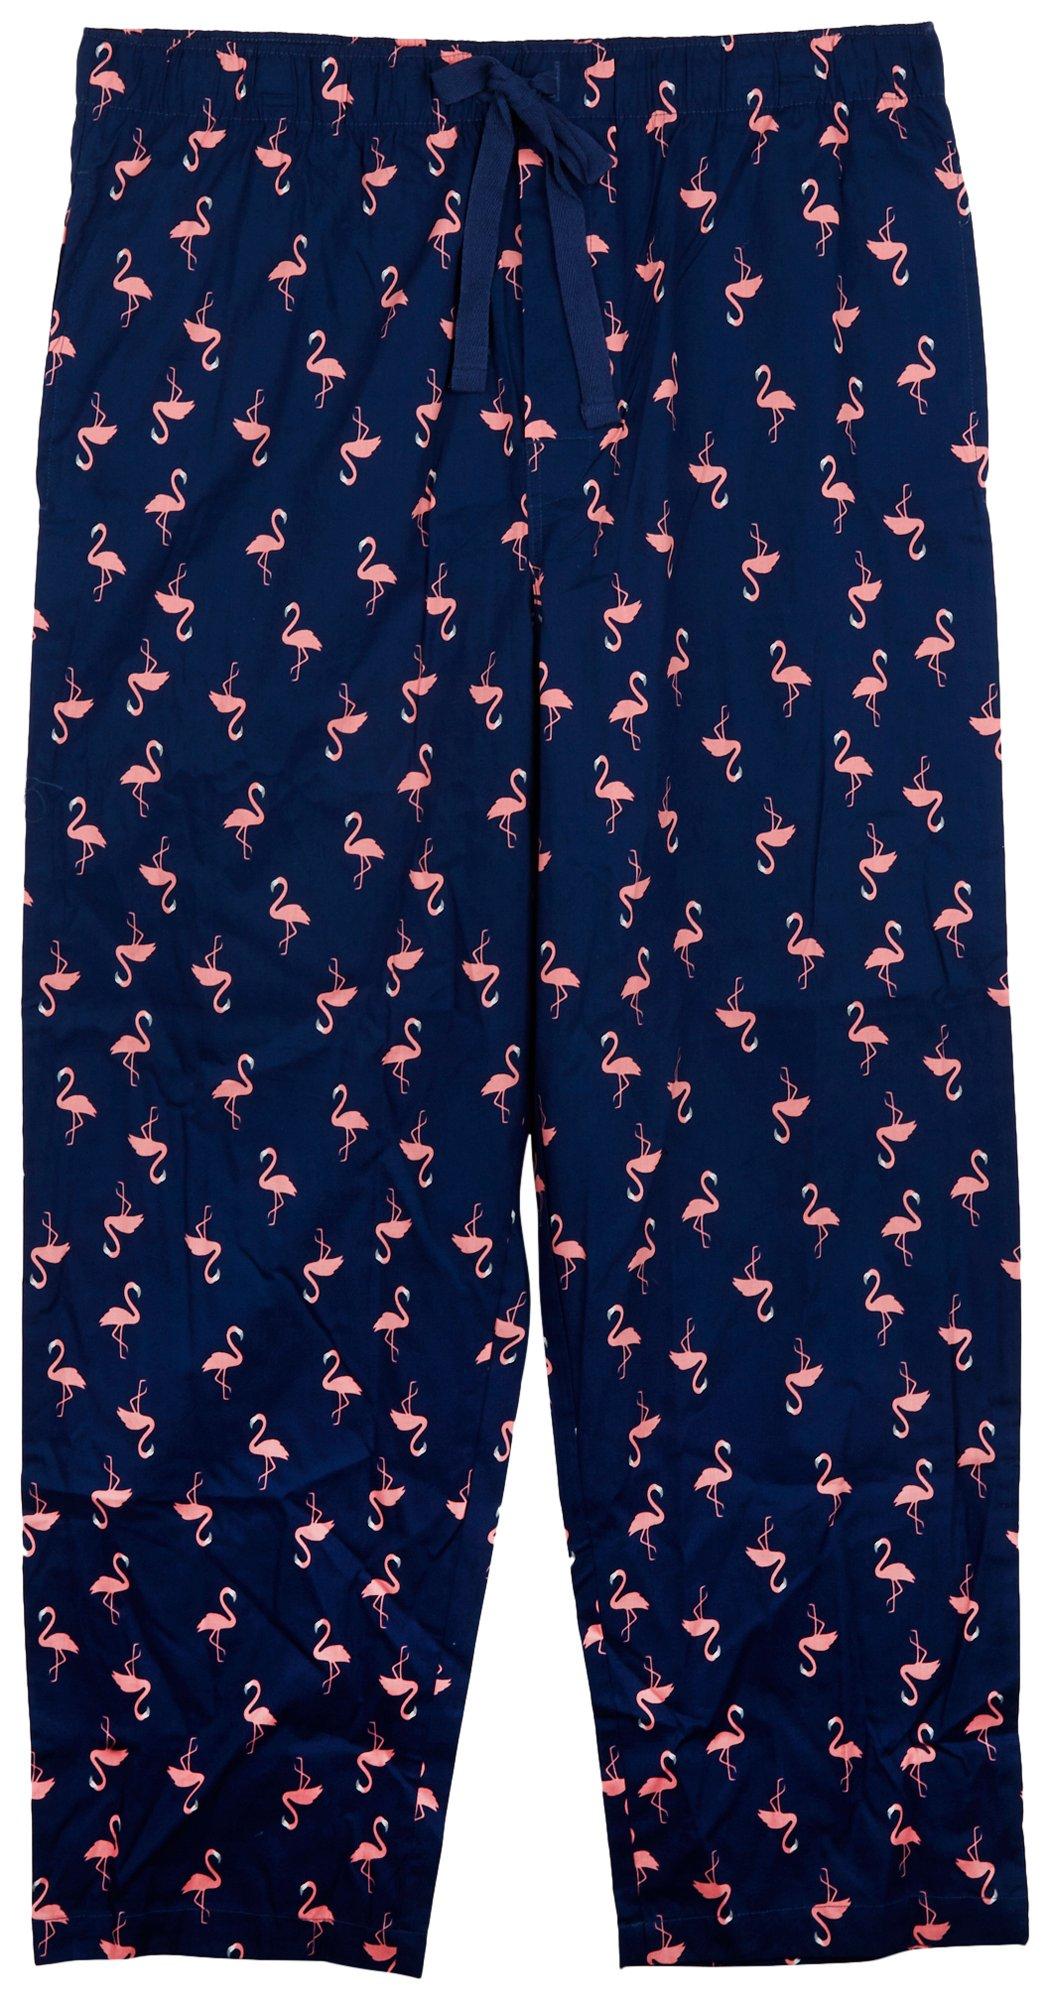 IZOD Mens Flamingo Pocket Sleep Pant